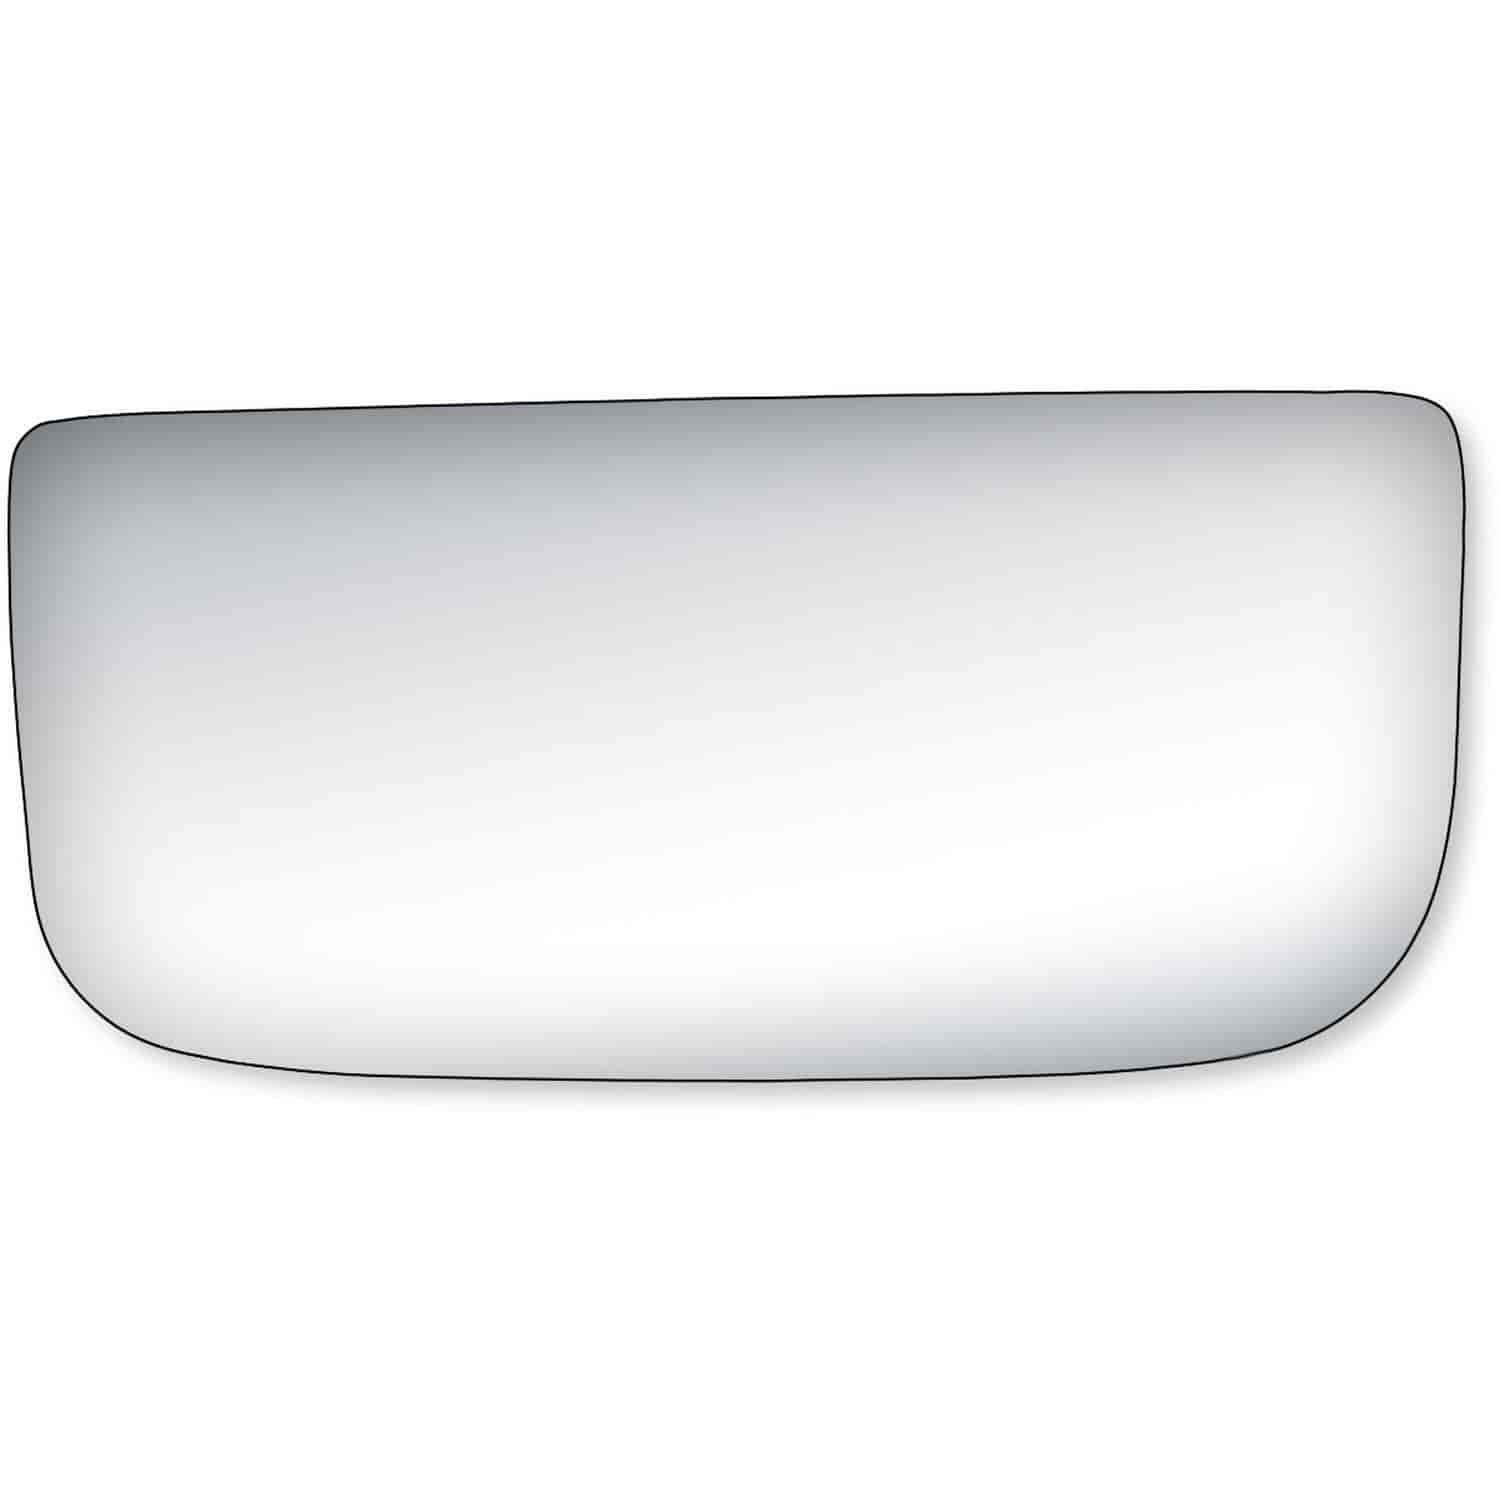 Replacement Glass for 2000-2014 Escalade/Suburban/Tahoe/Yukon towing mirror bottom lens